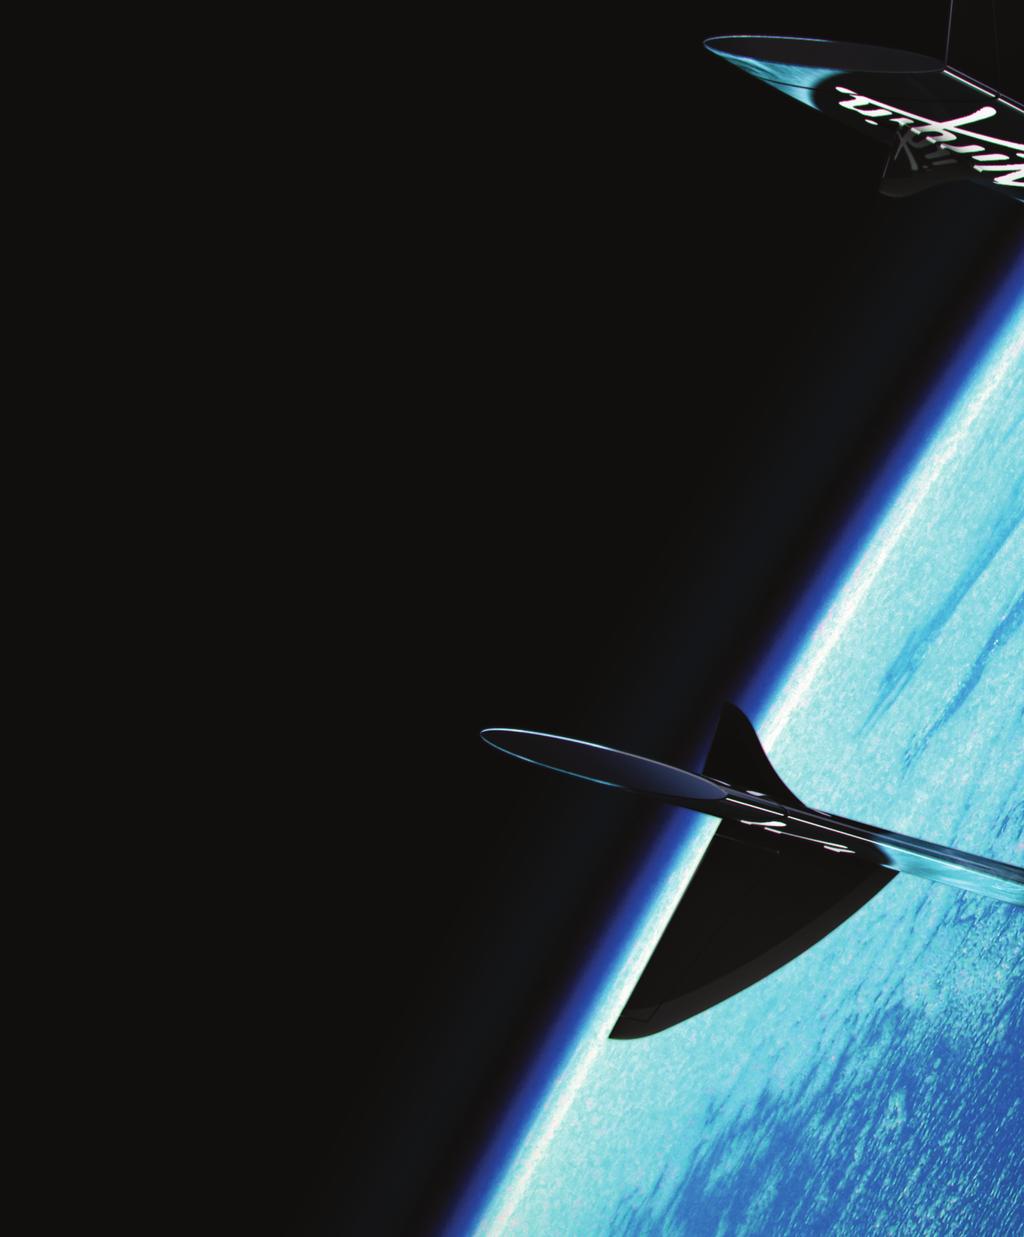 Space, The Final Frontier Sir Richard Branson s Virgin Galactic